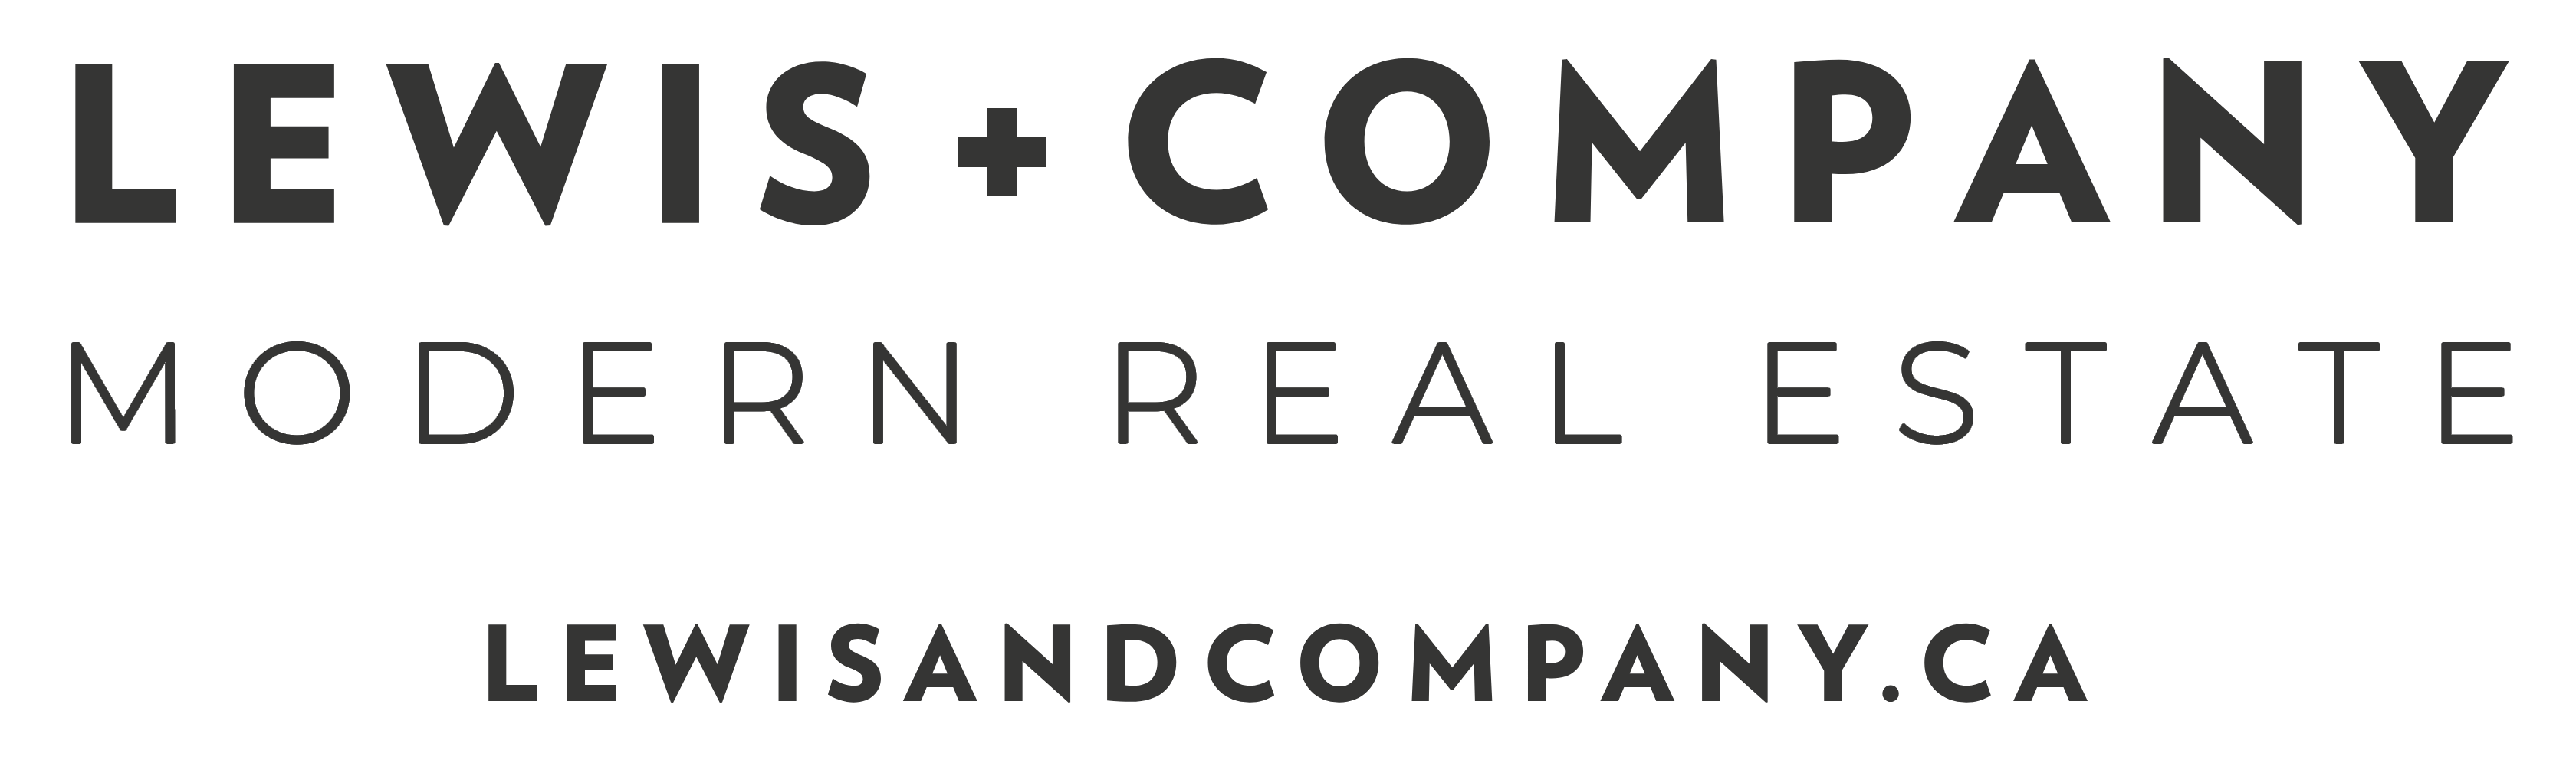 Lewis + Company Logo w Website